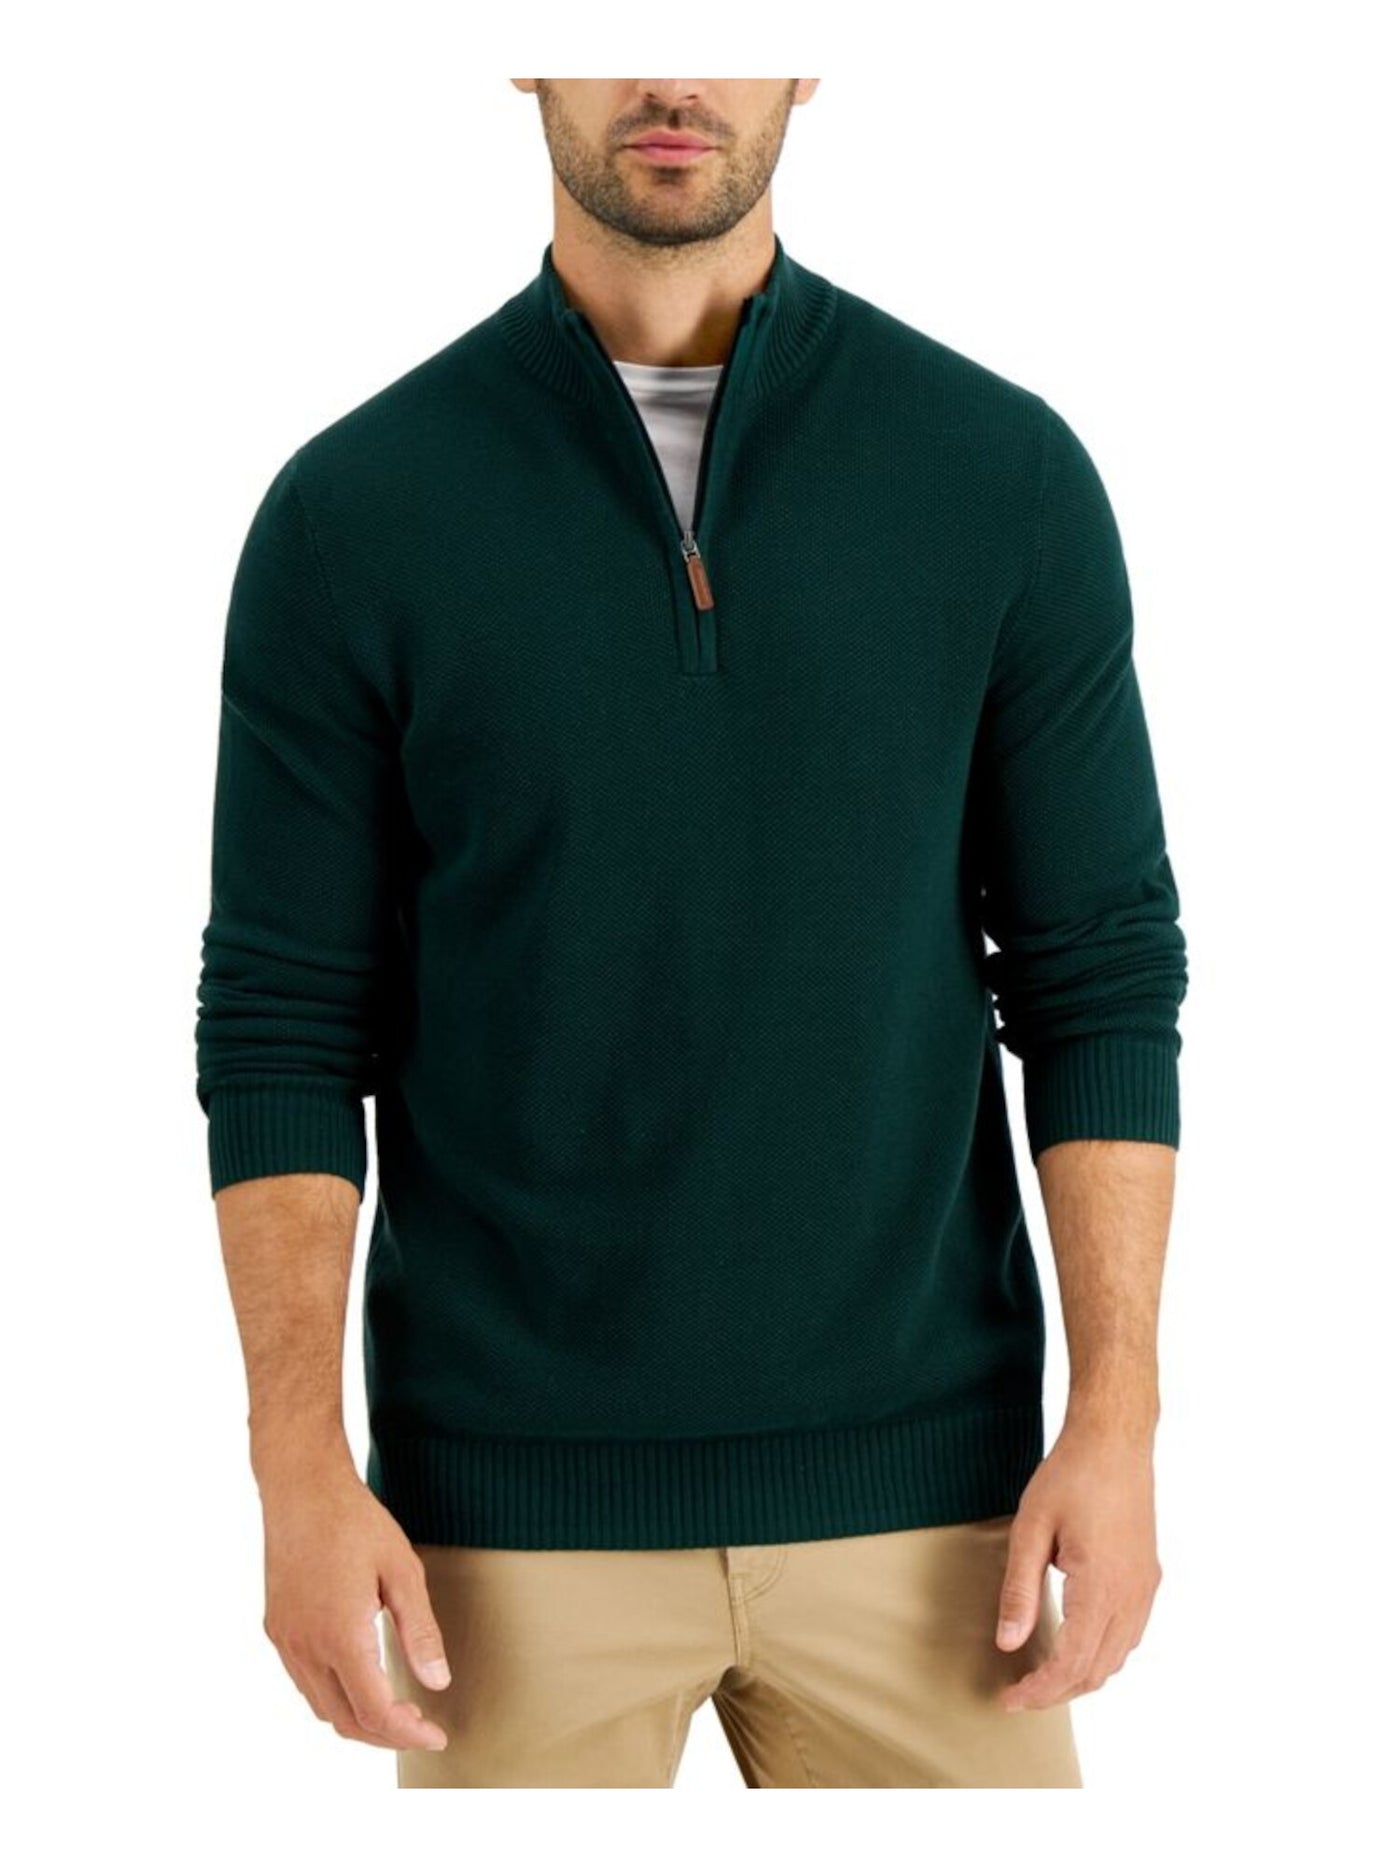 CLUBROOM Mens Green Quarter-Zip Pullover Sweater S